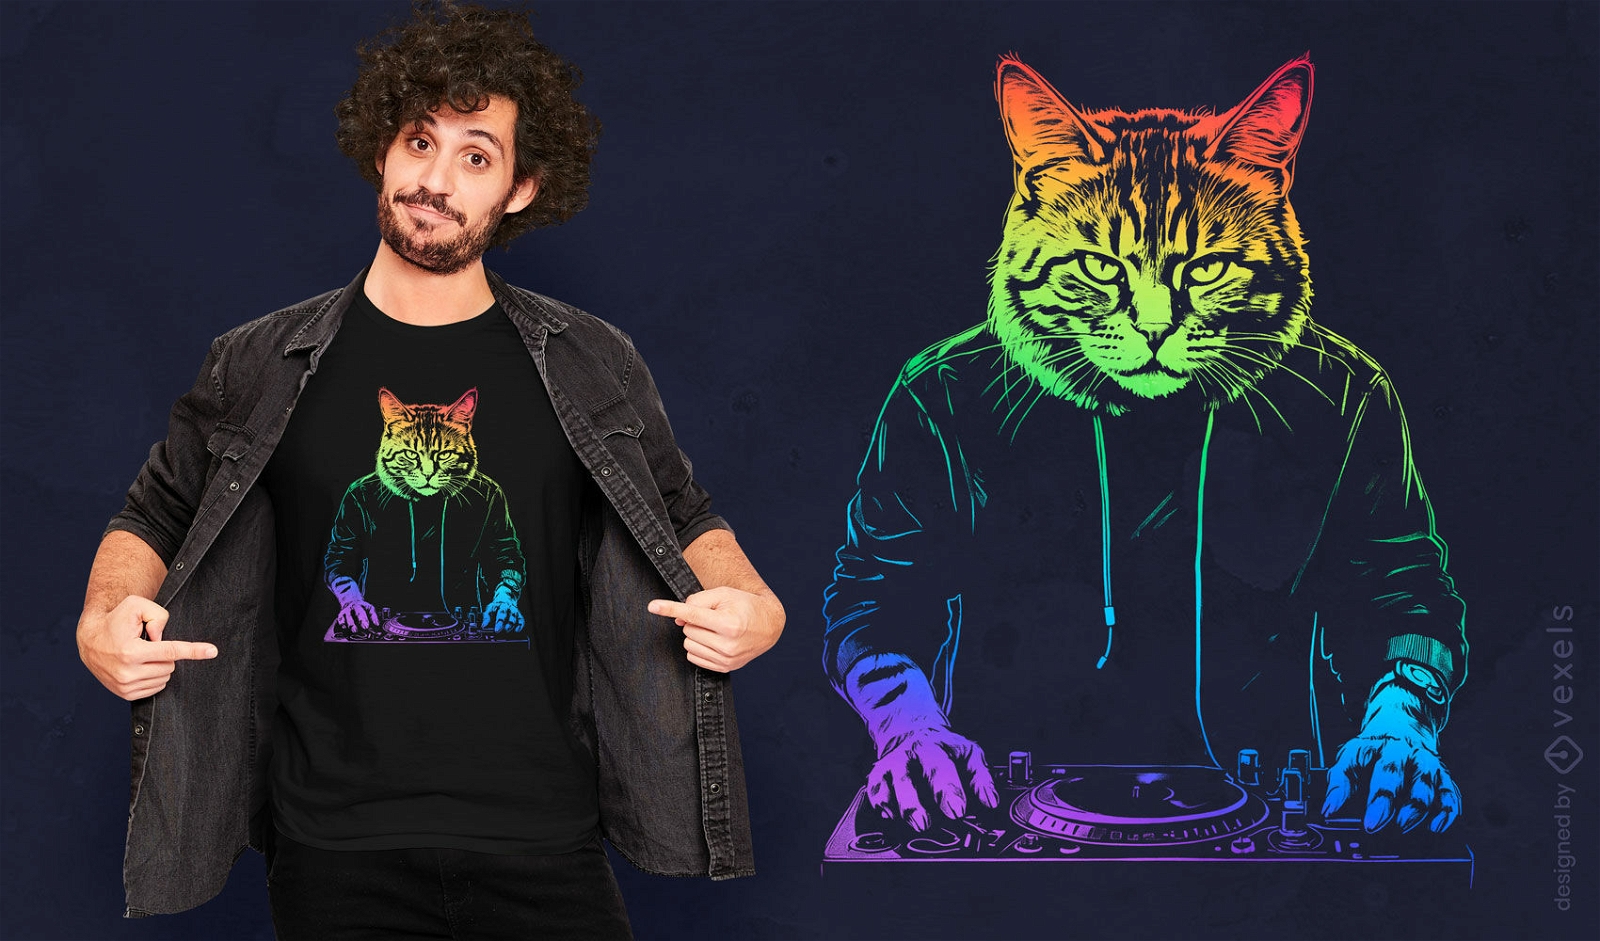 Dise?o de camiseta de DJ Neon Cat.